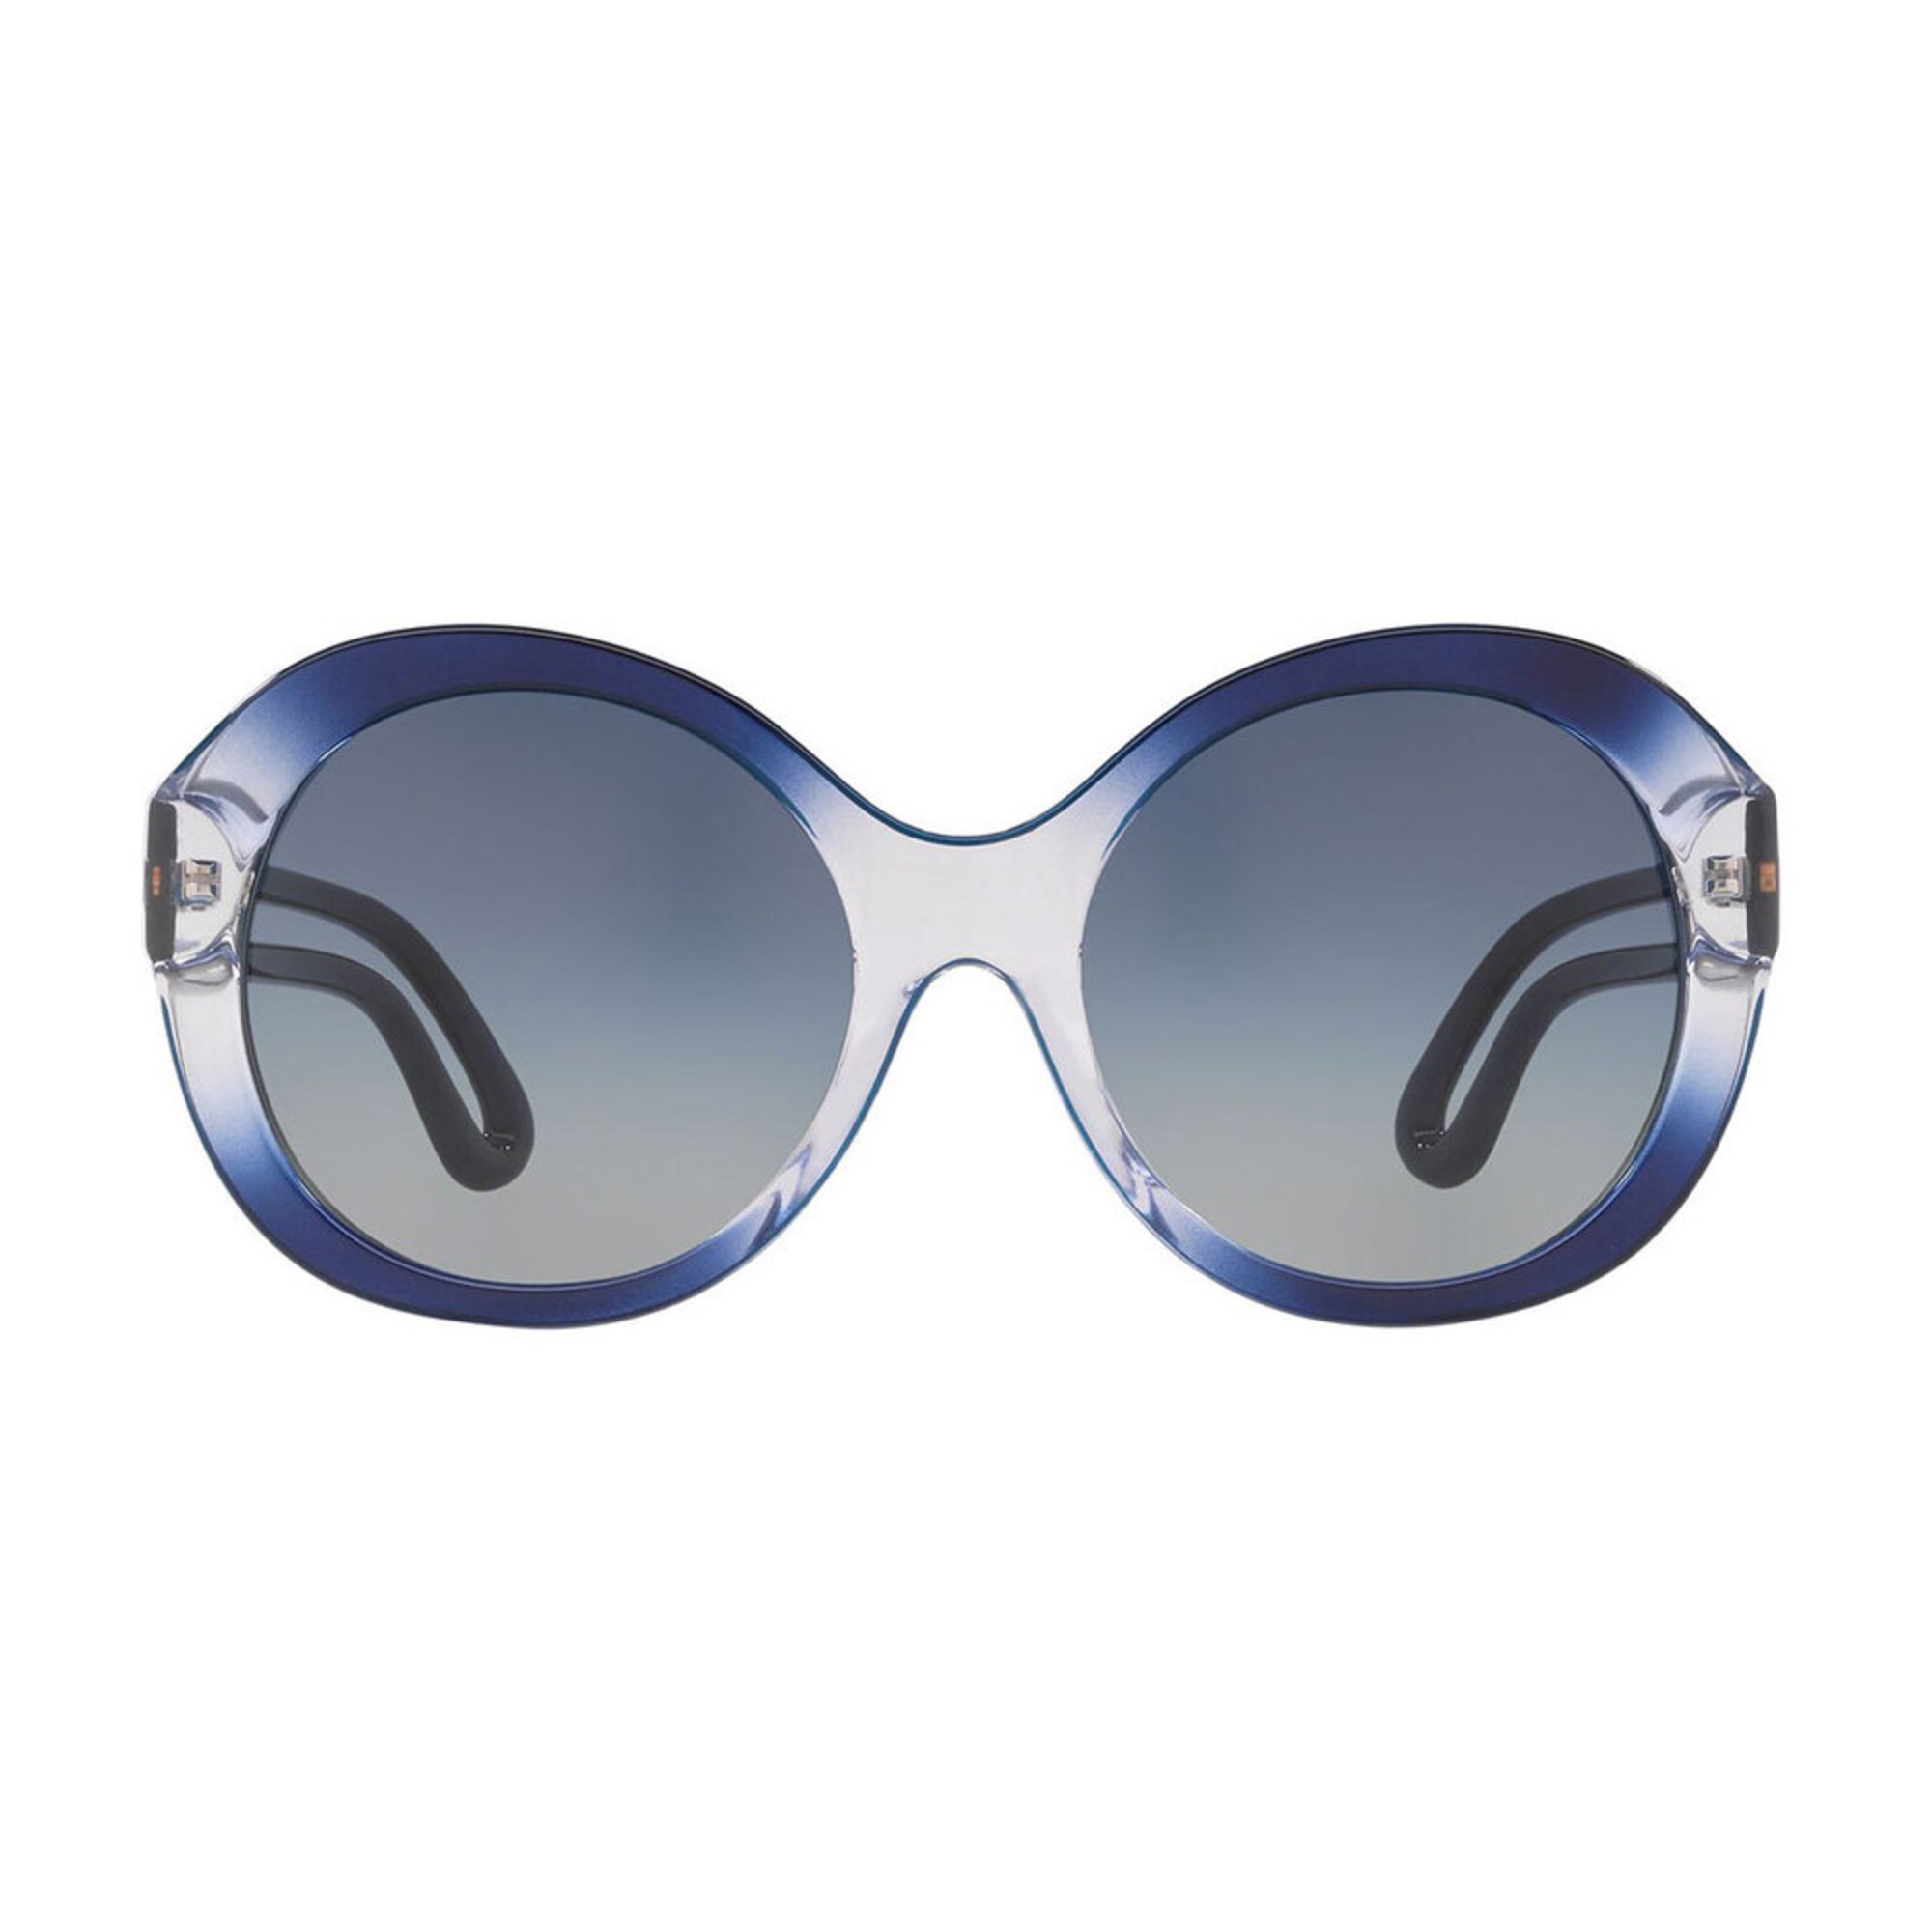 Tory Burch Womens Crystal Frame Sunglasses 55mm | Women's Sunglasses ...